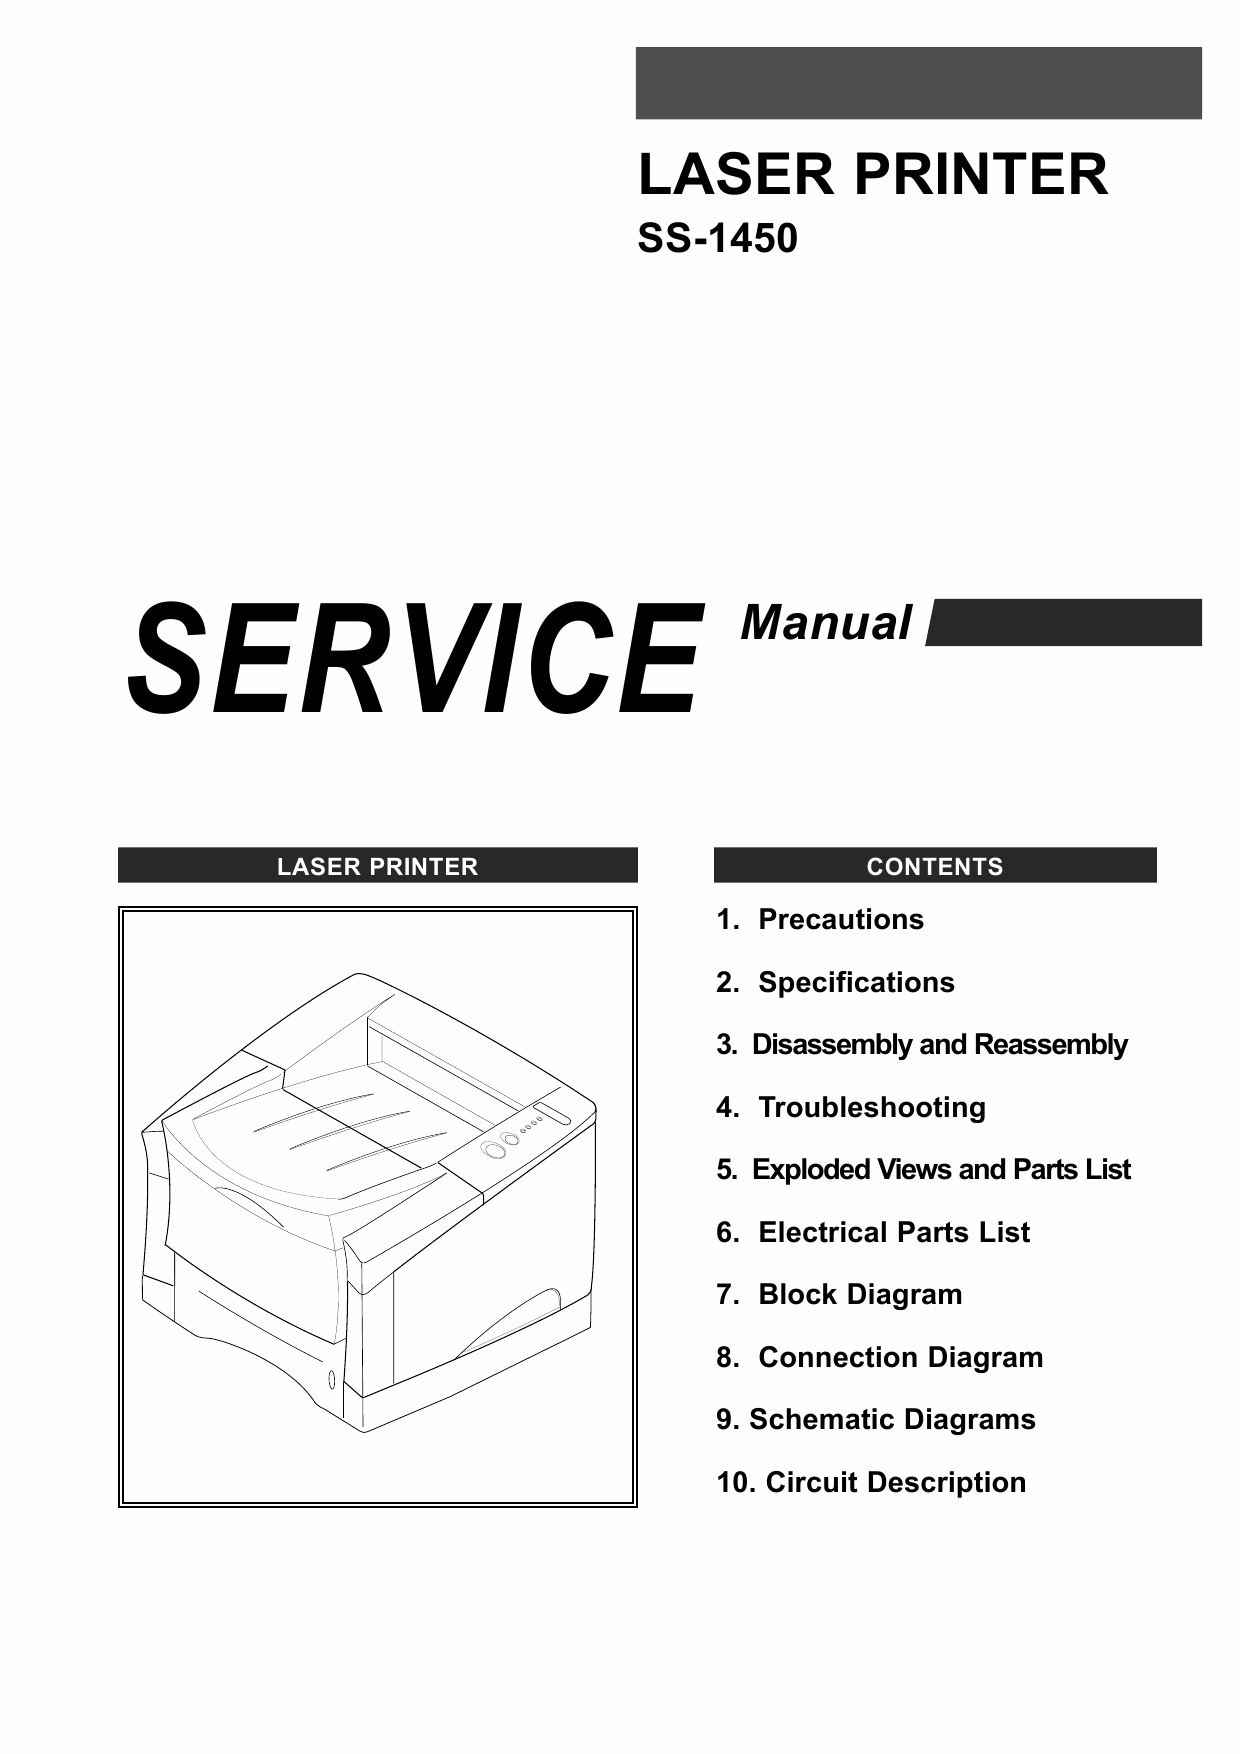 Samsung Laser-Printer SS-1450 Parts and Service Manual-1